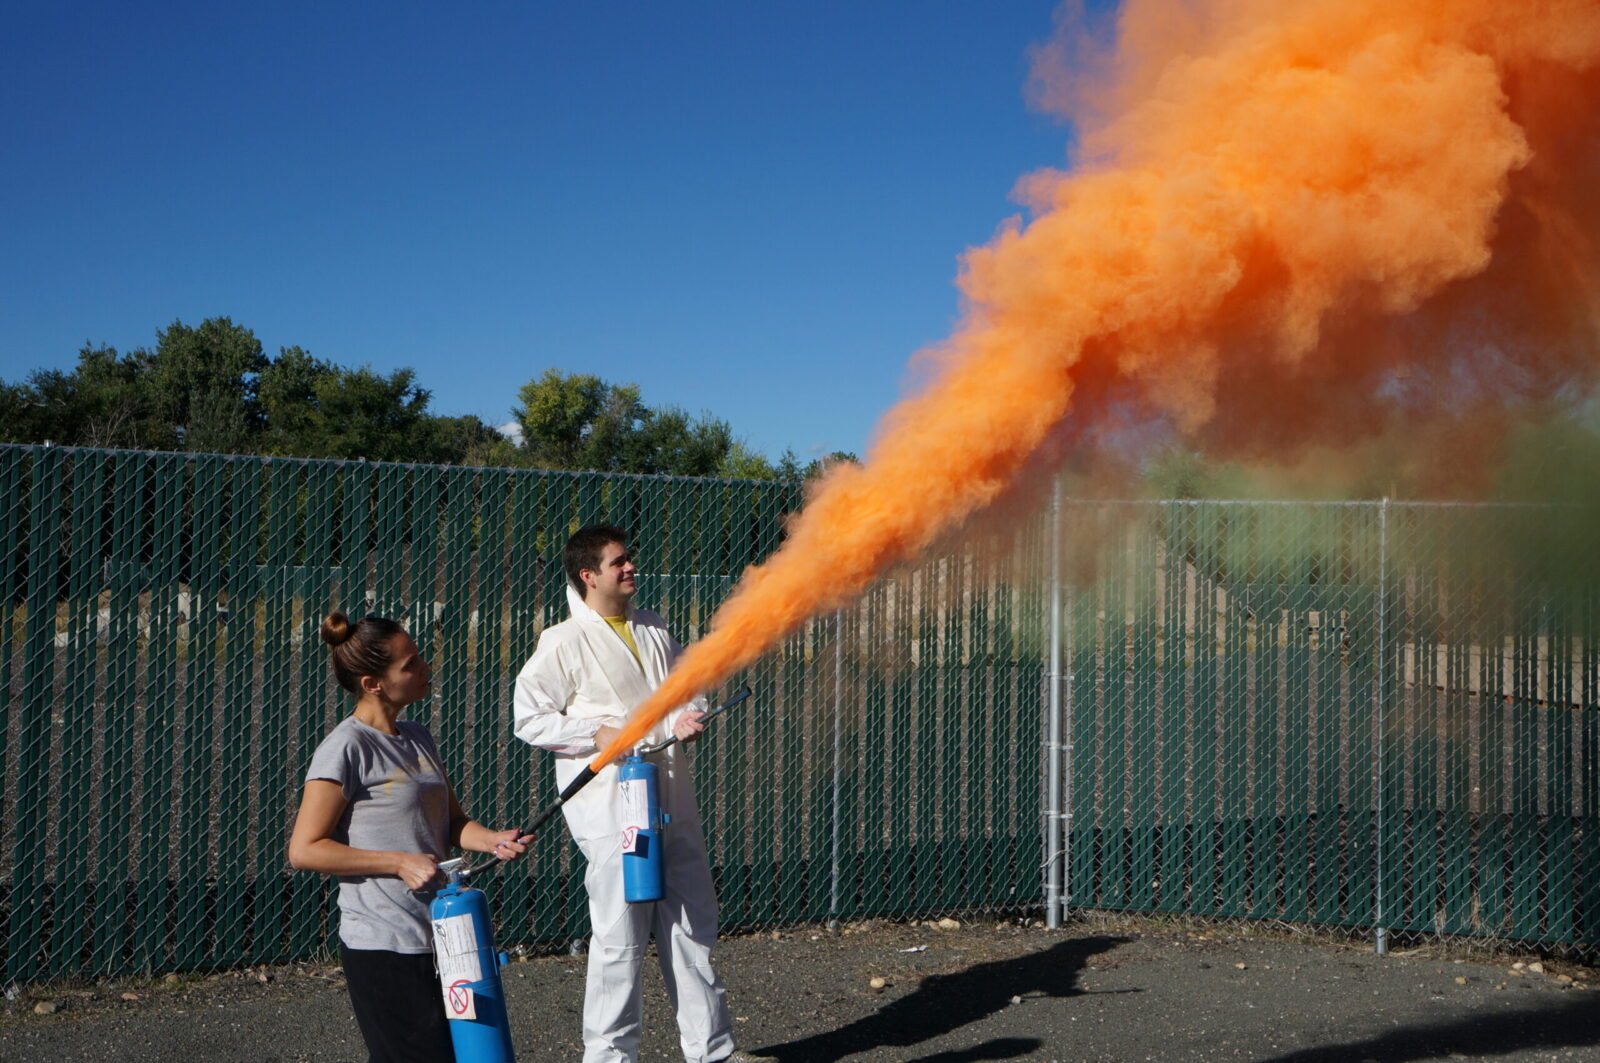 Color Powder Extinguishers